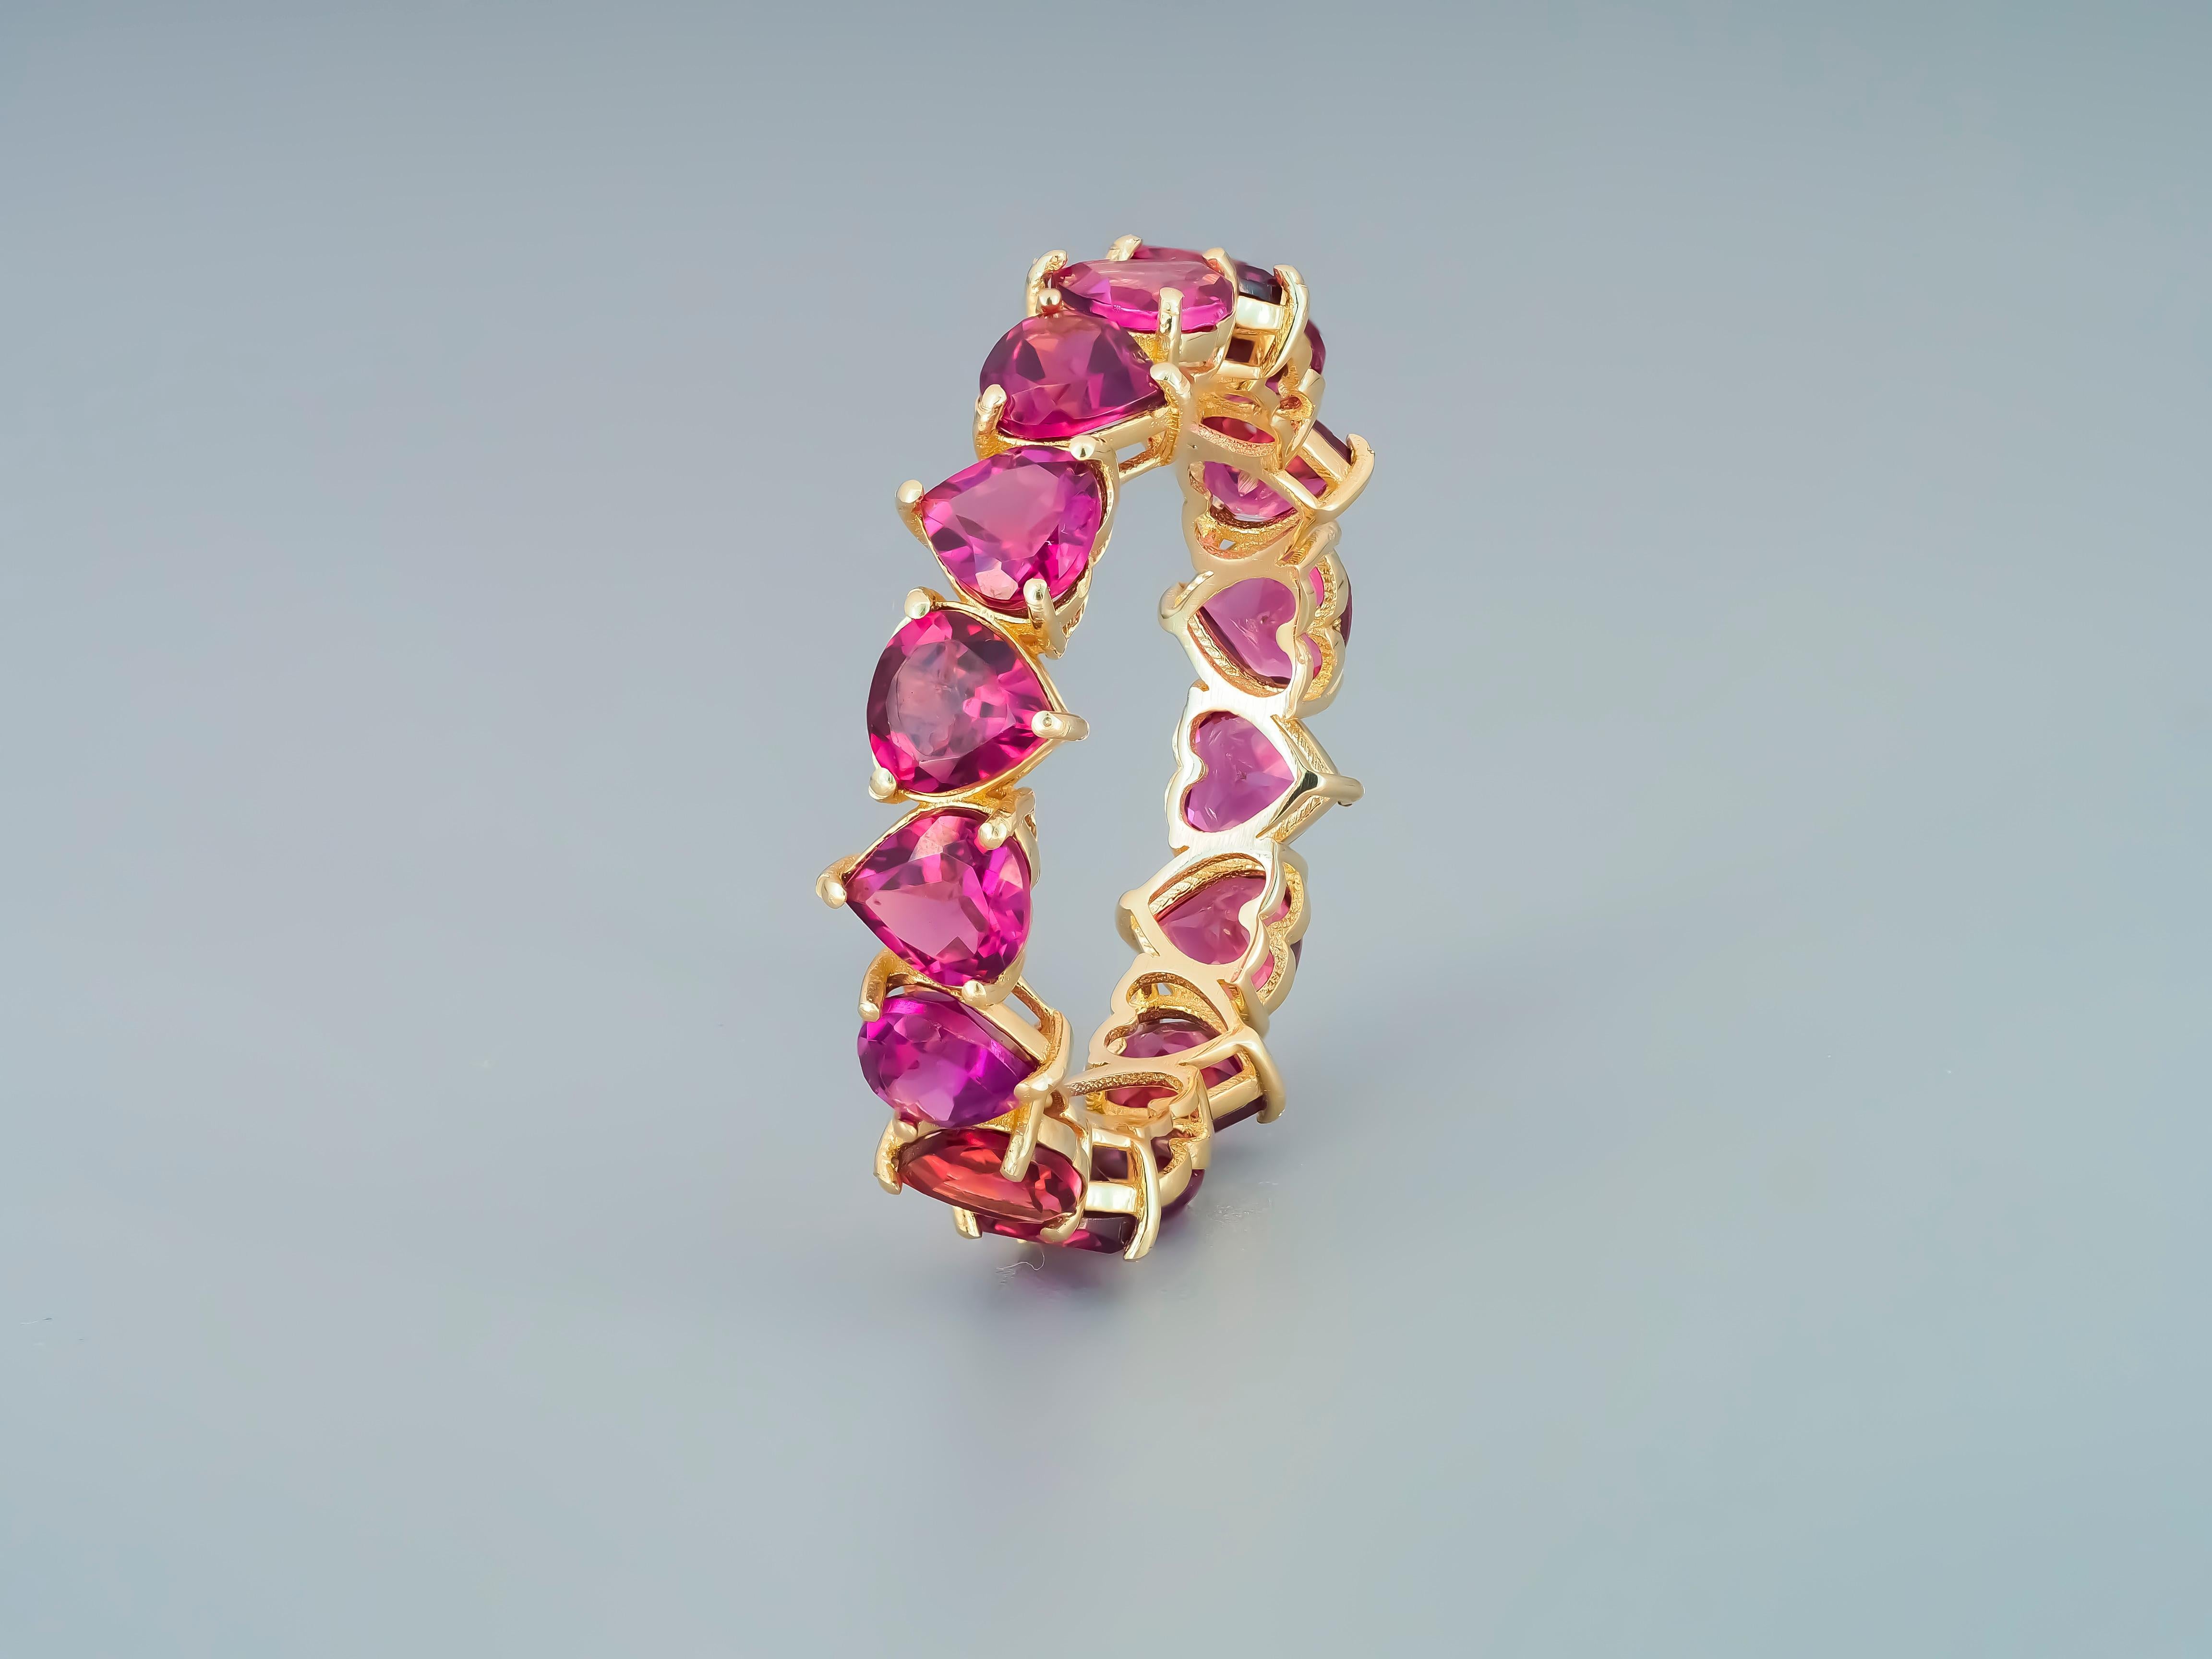 For Sale:  Heart garnet ring. 14k Gold Heart Eternity Ring with Heart Garnets! 7